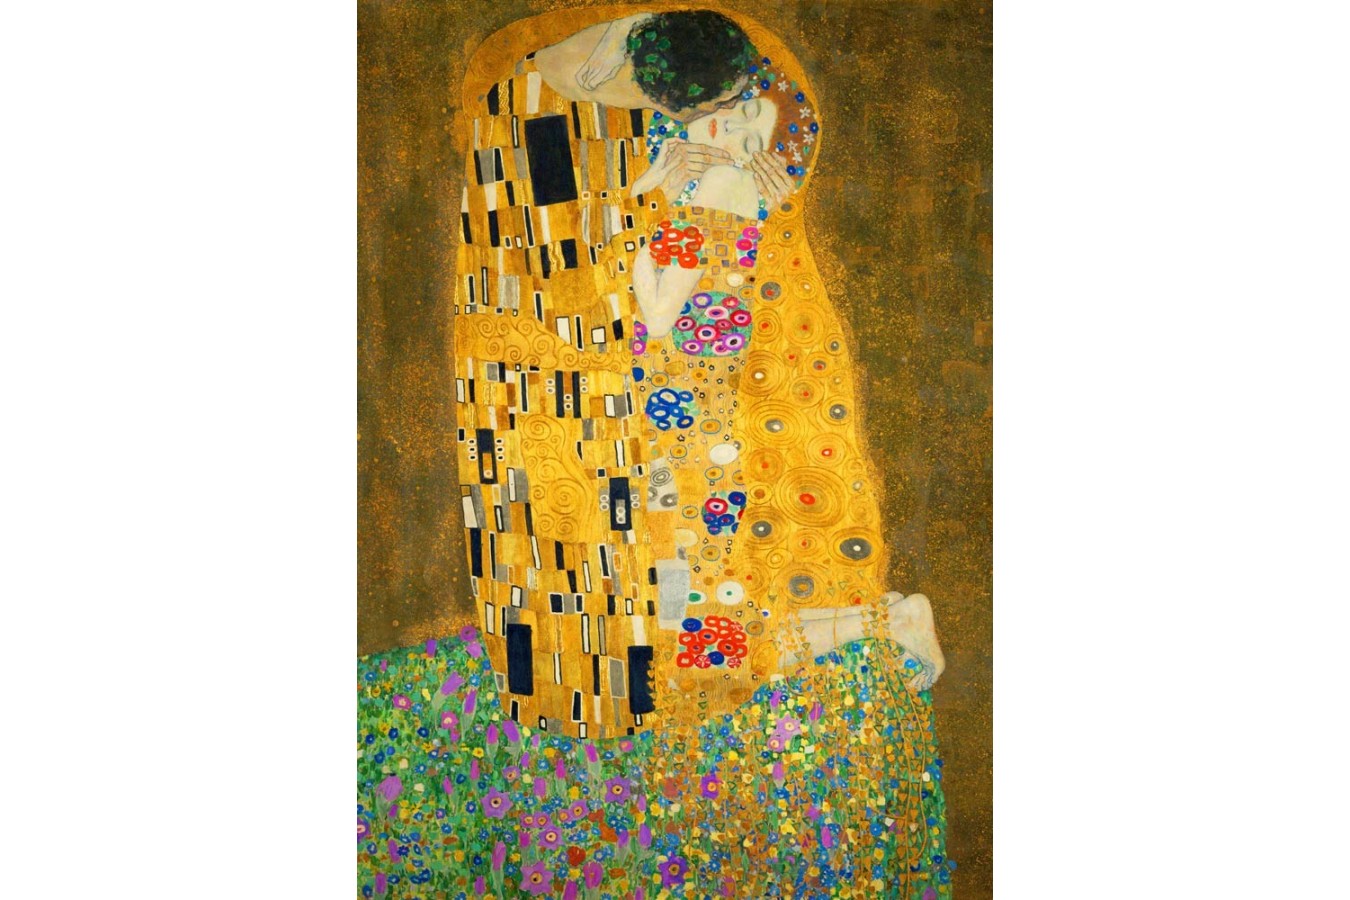 Puzzle 1000 piese - Gustav Klimt: The Kiss, 1908 (Art-by-Bluebird-60015)